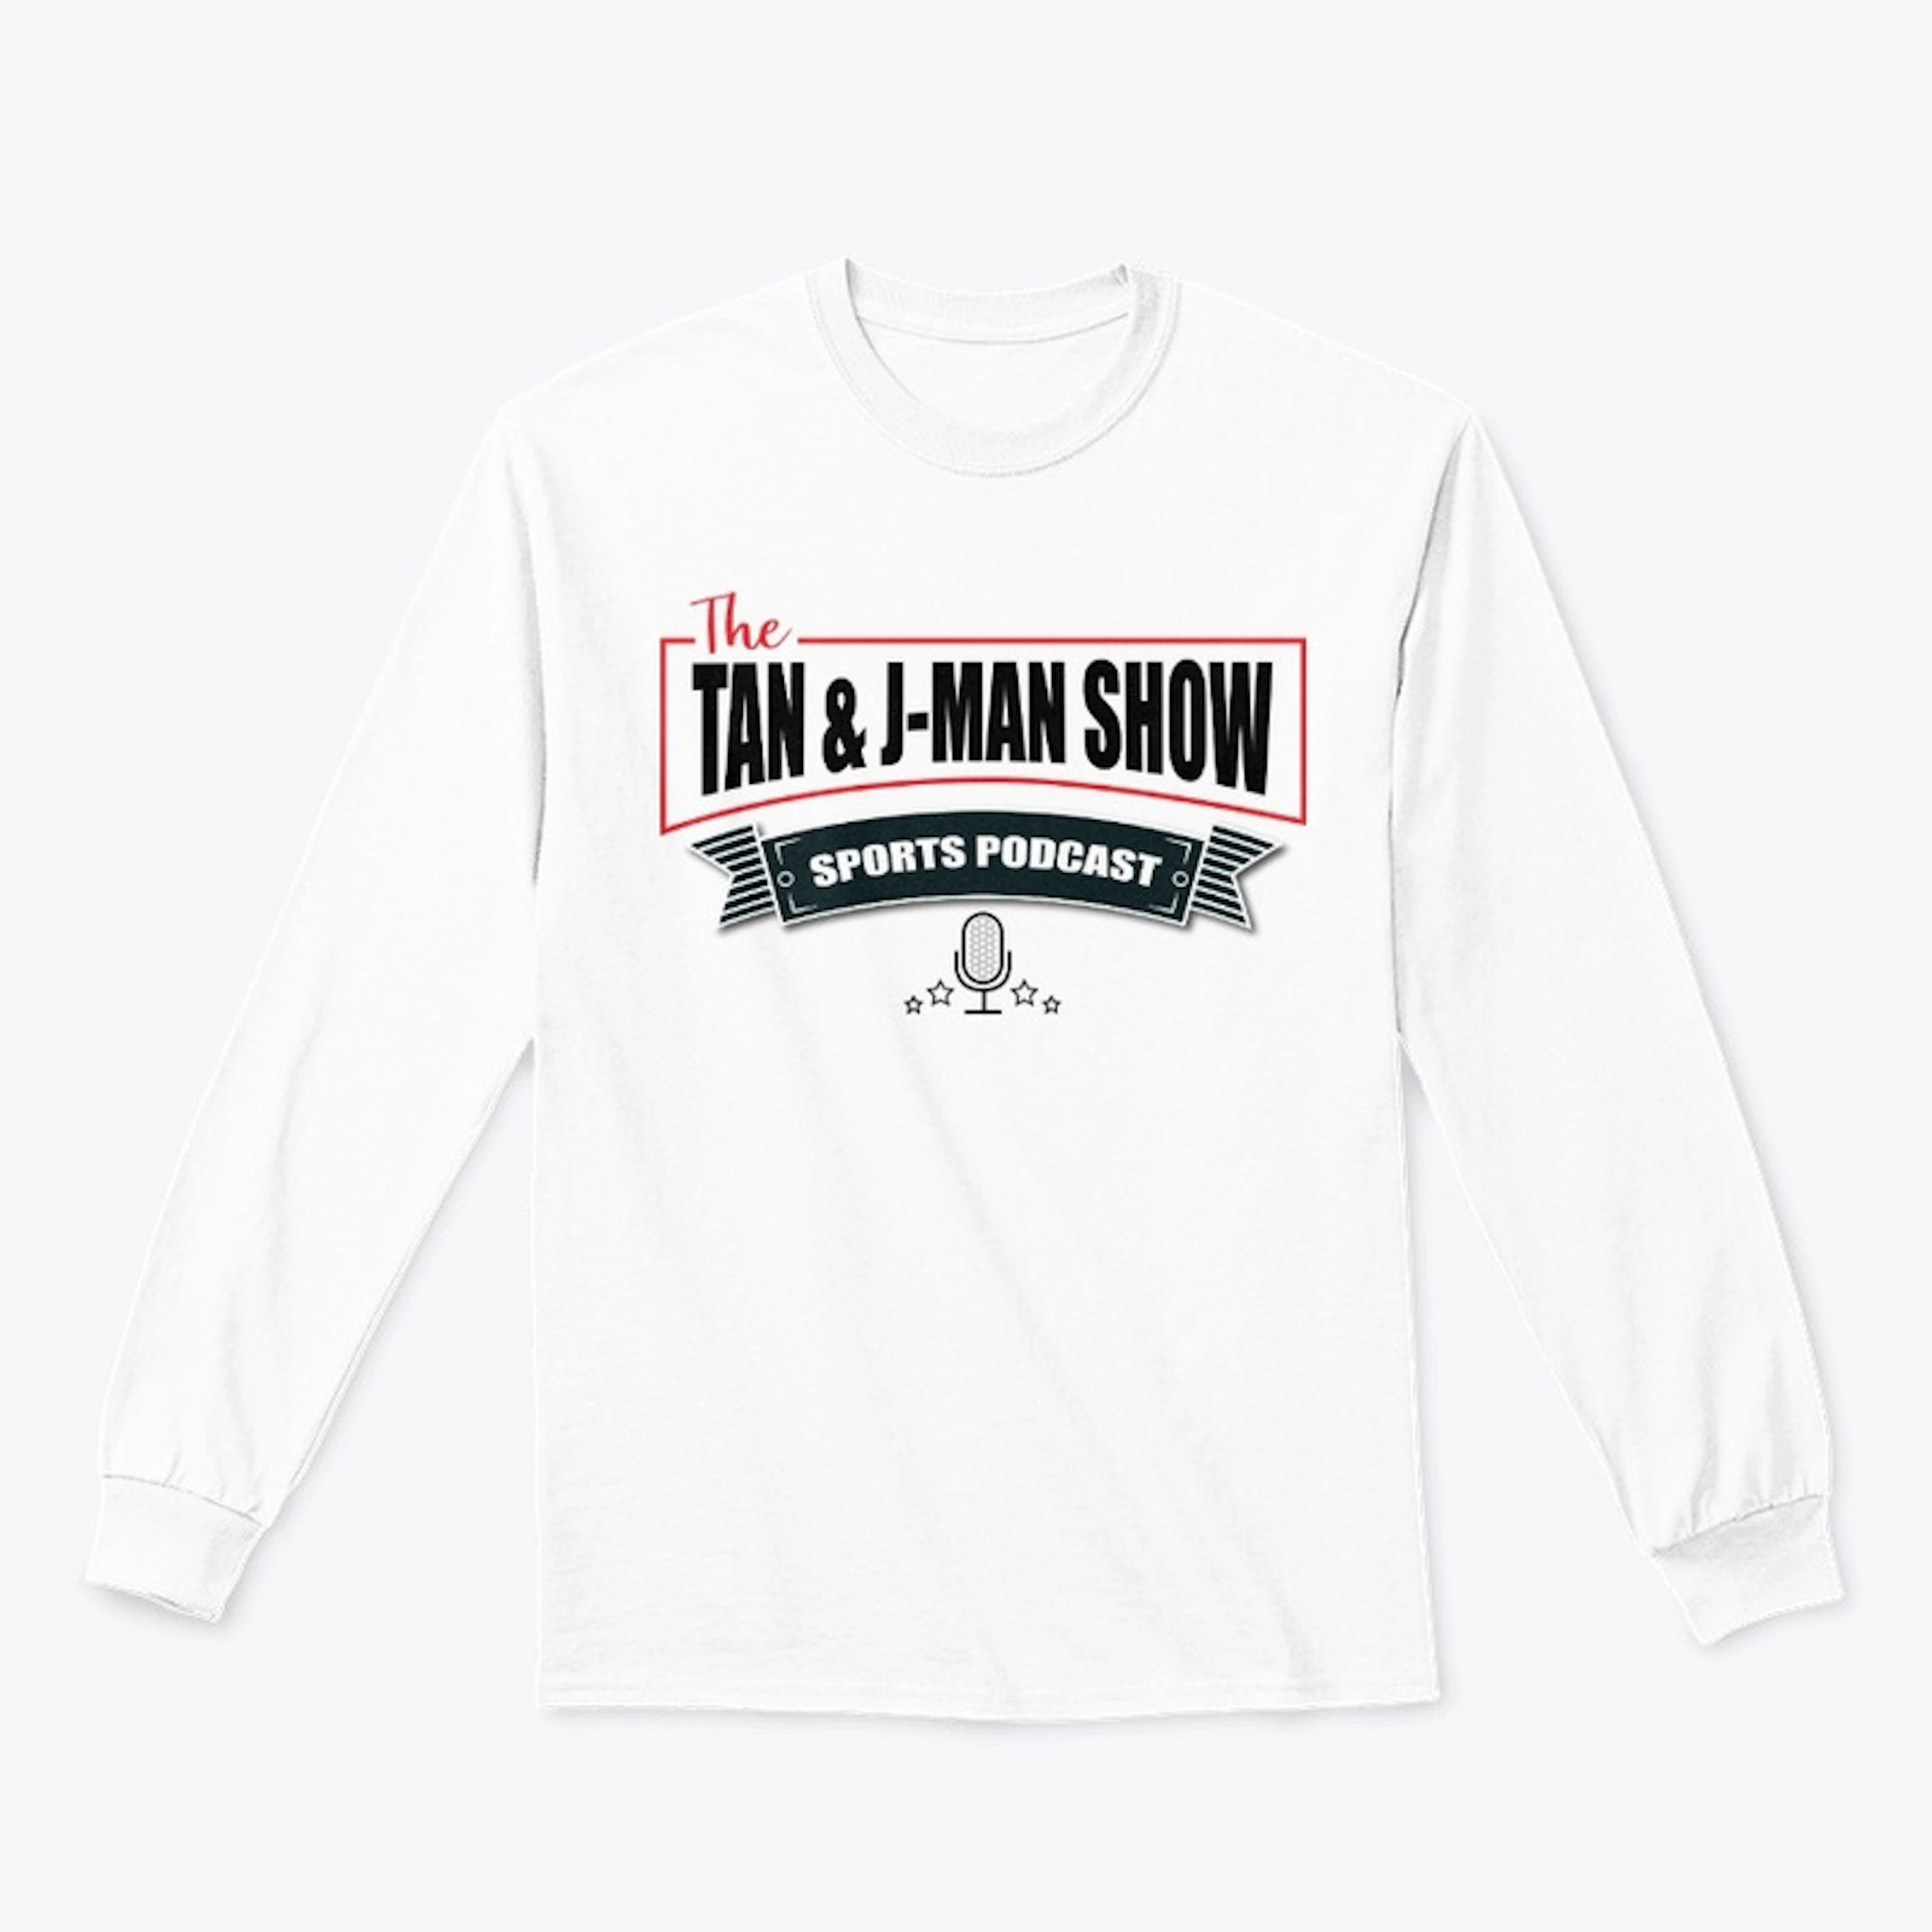 Tan and J-Man Show Long Sleeve T-Shirt